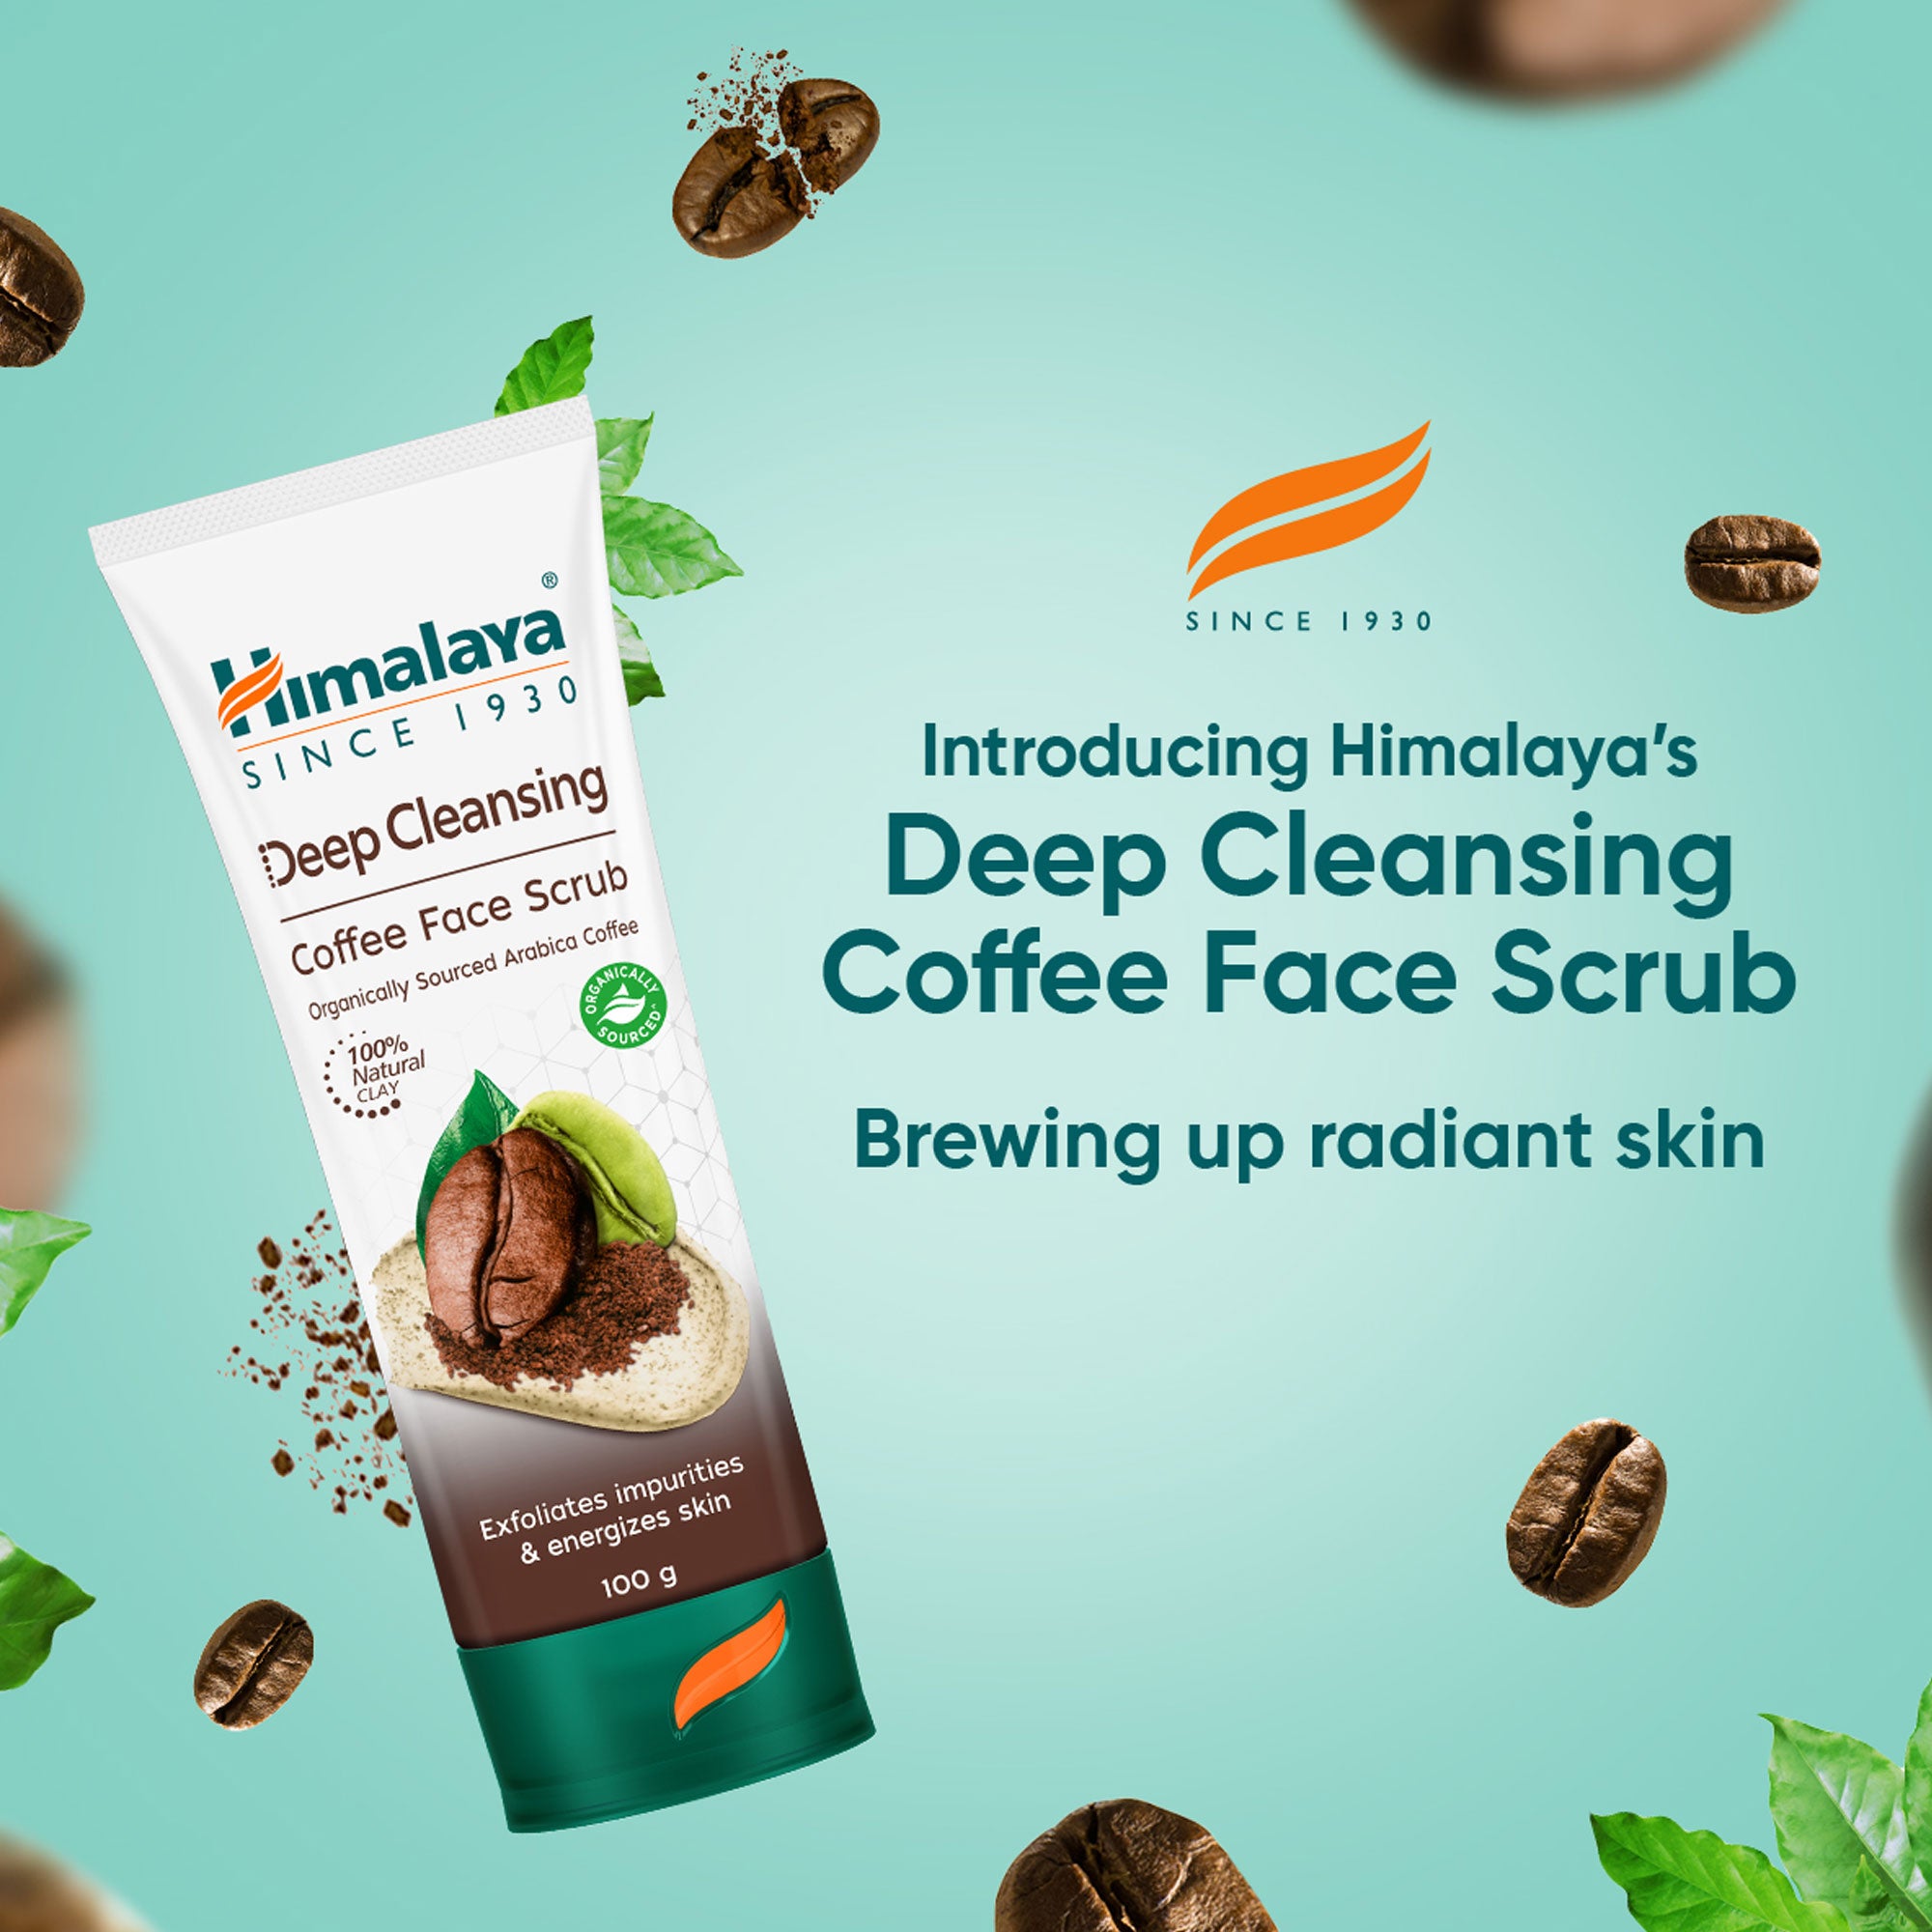 Himalaya Deep Cleansing Coffee Face Scrub 100g - Brewing up radiant skin